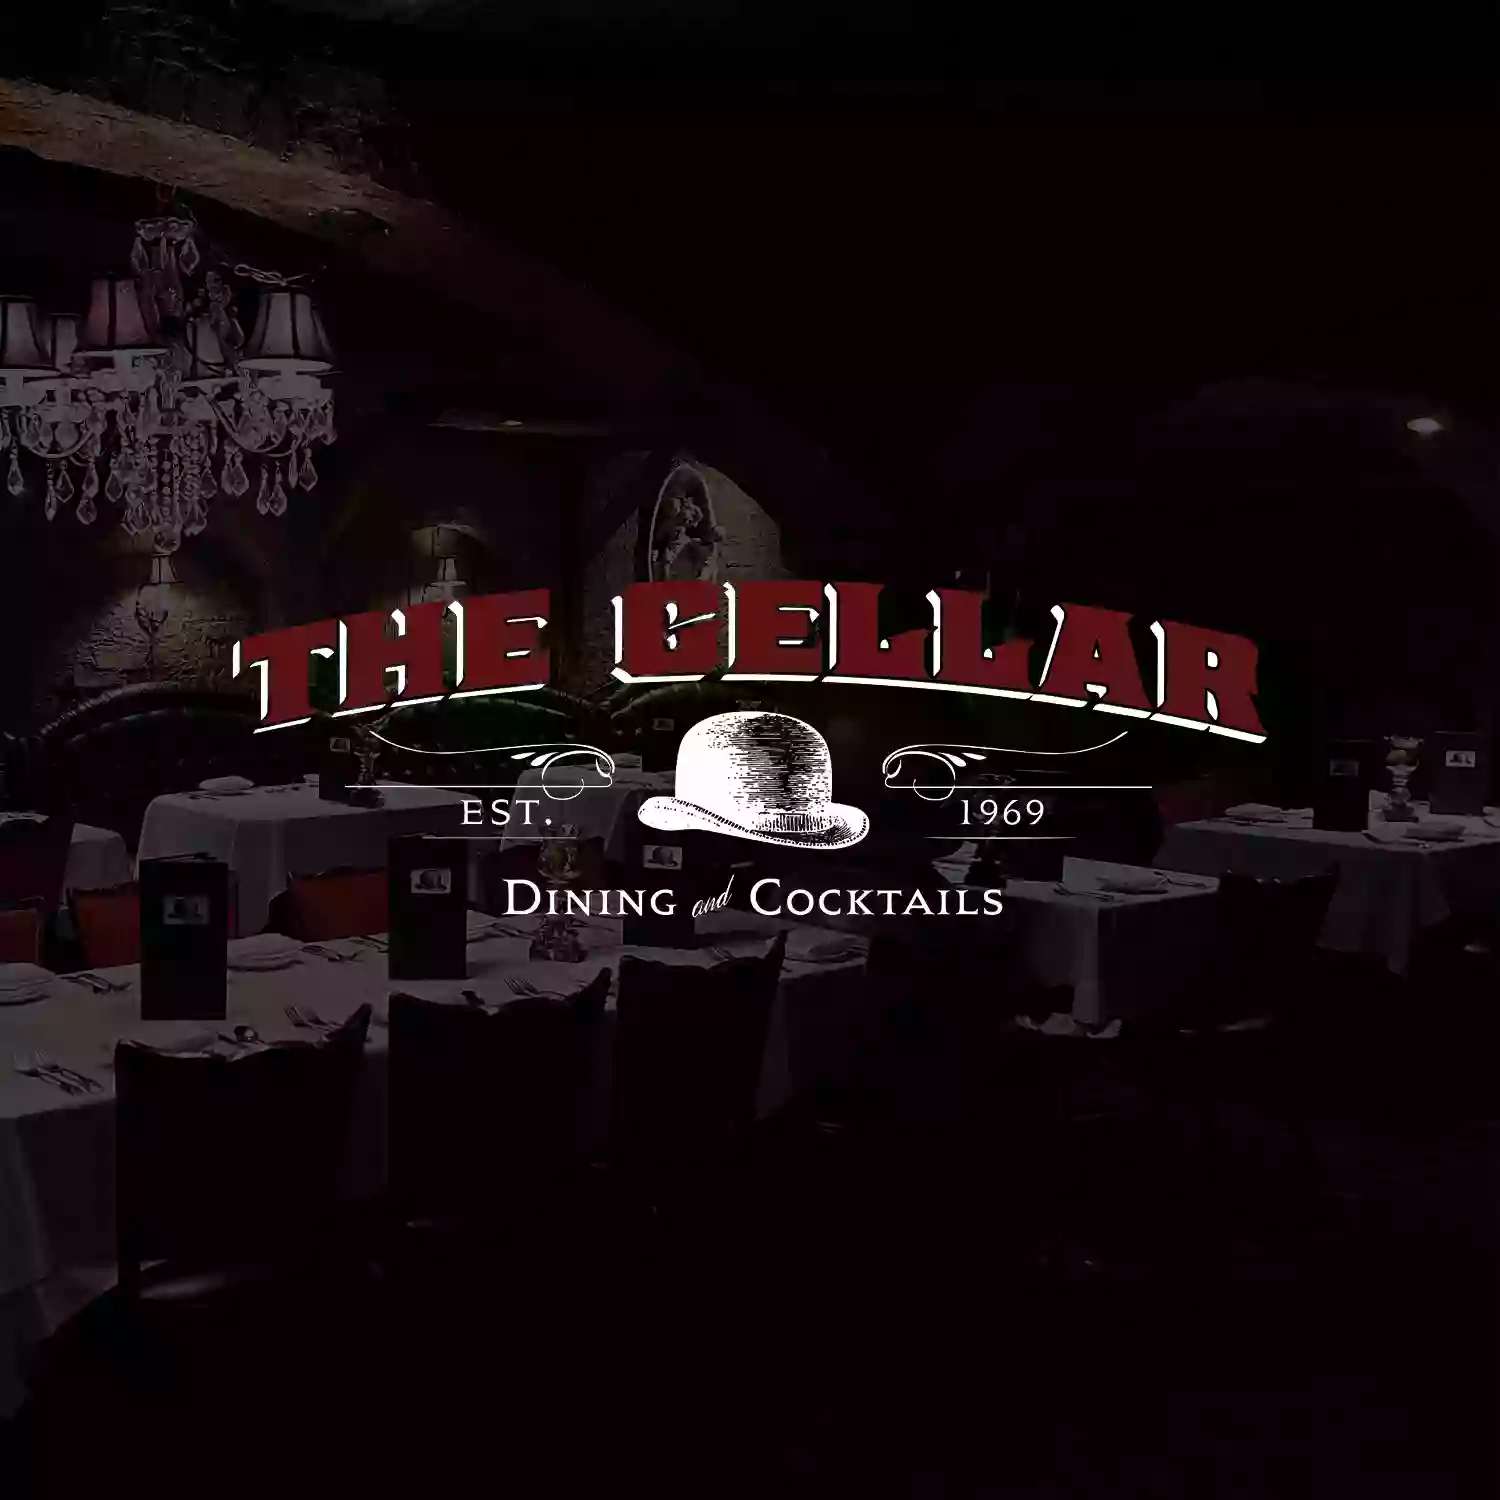 The Cellar Restaurant